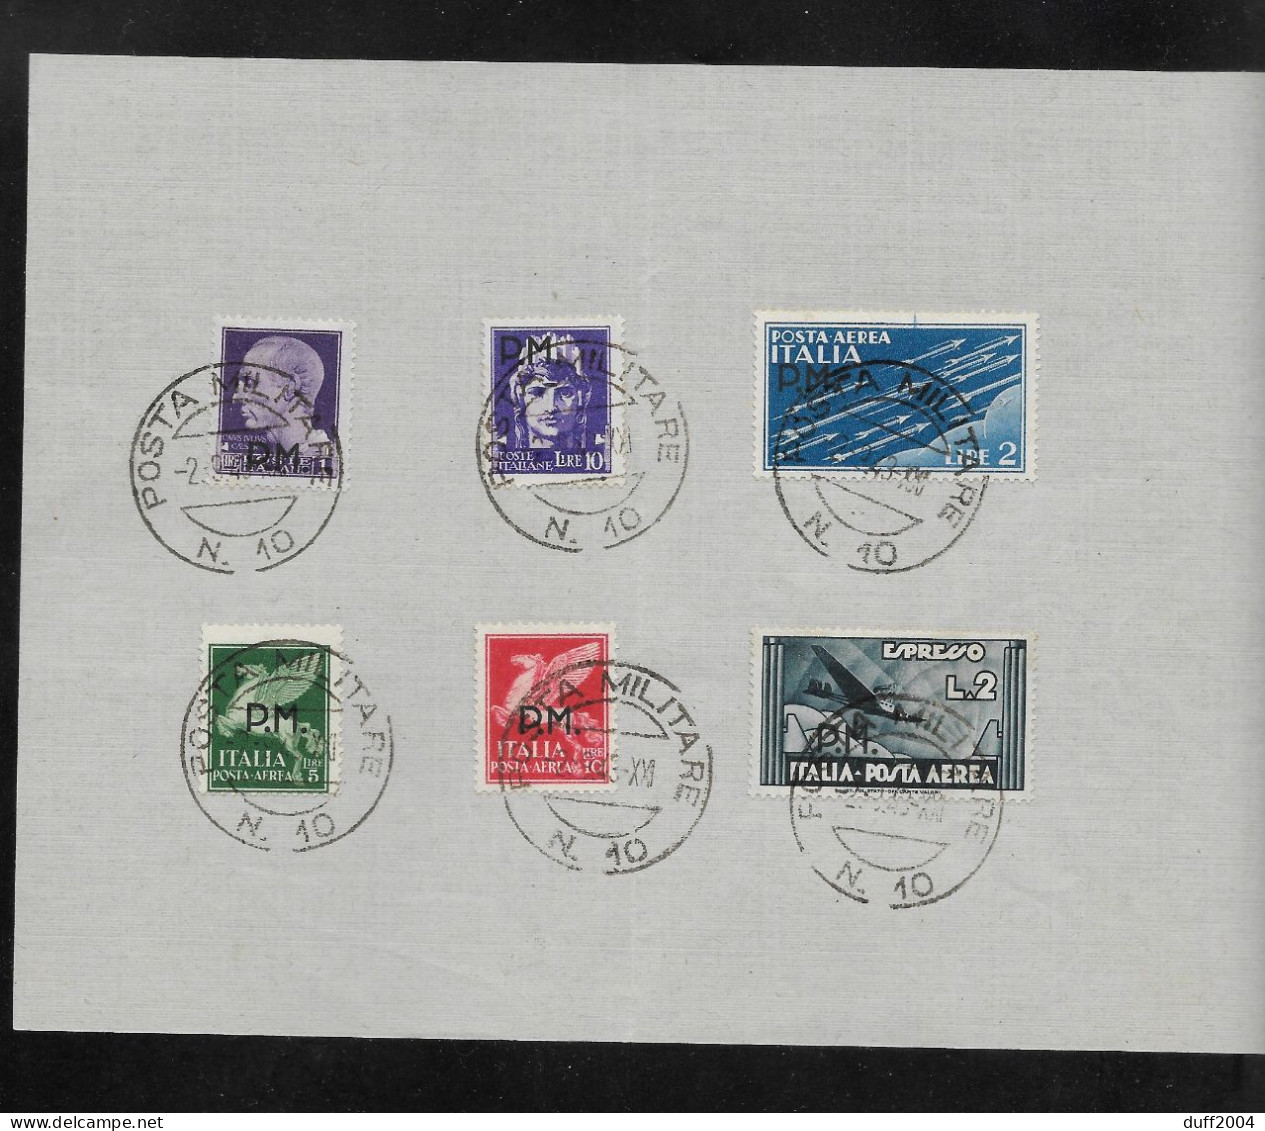 1942 - SERIE COMPLETA DI N. 20 FRANBOLLI - BOLLI P.M.N.93 E P.M. N.10 - Military Mail (PM)